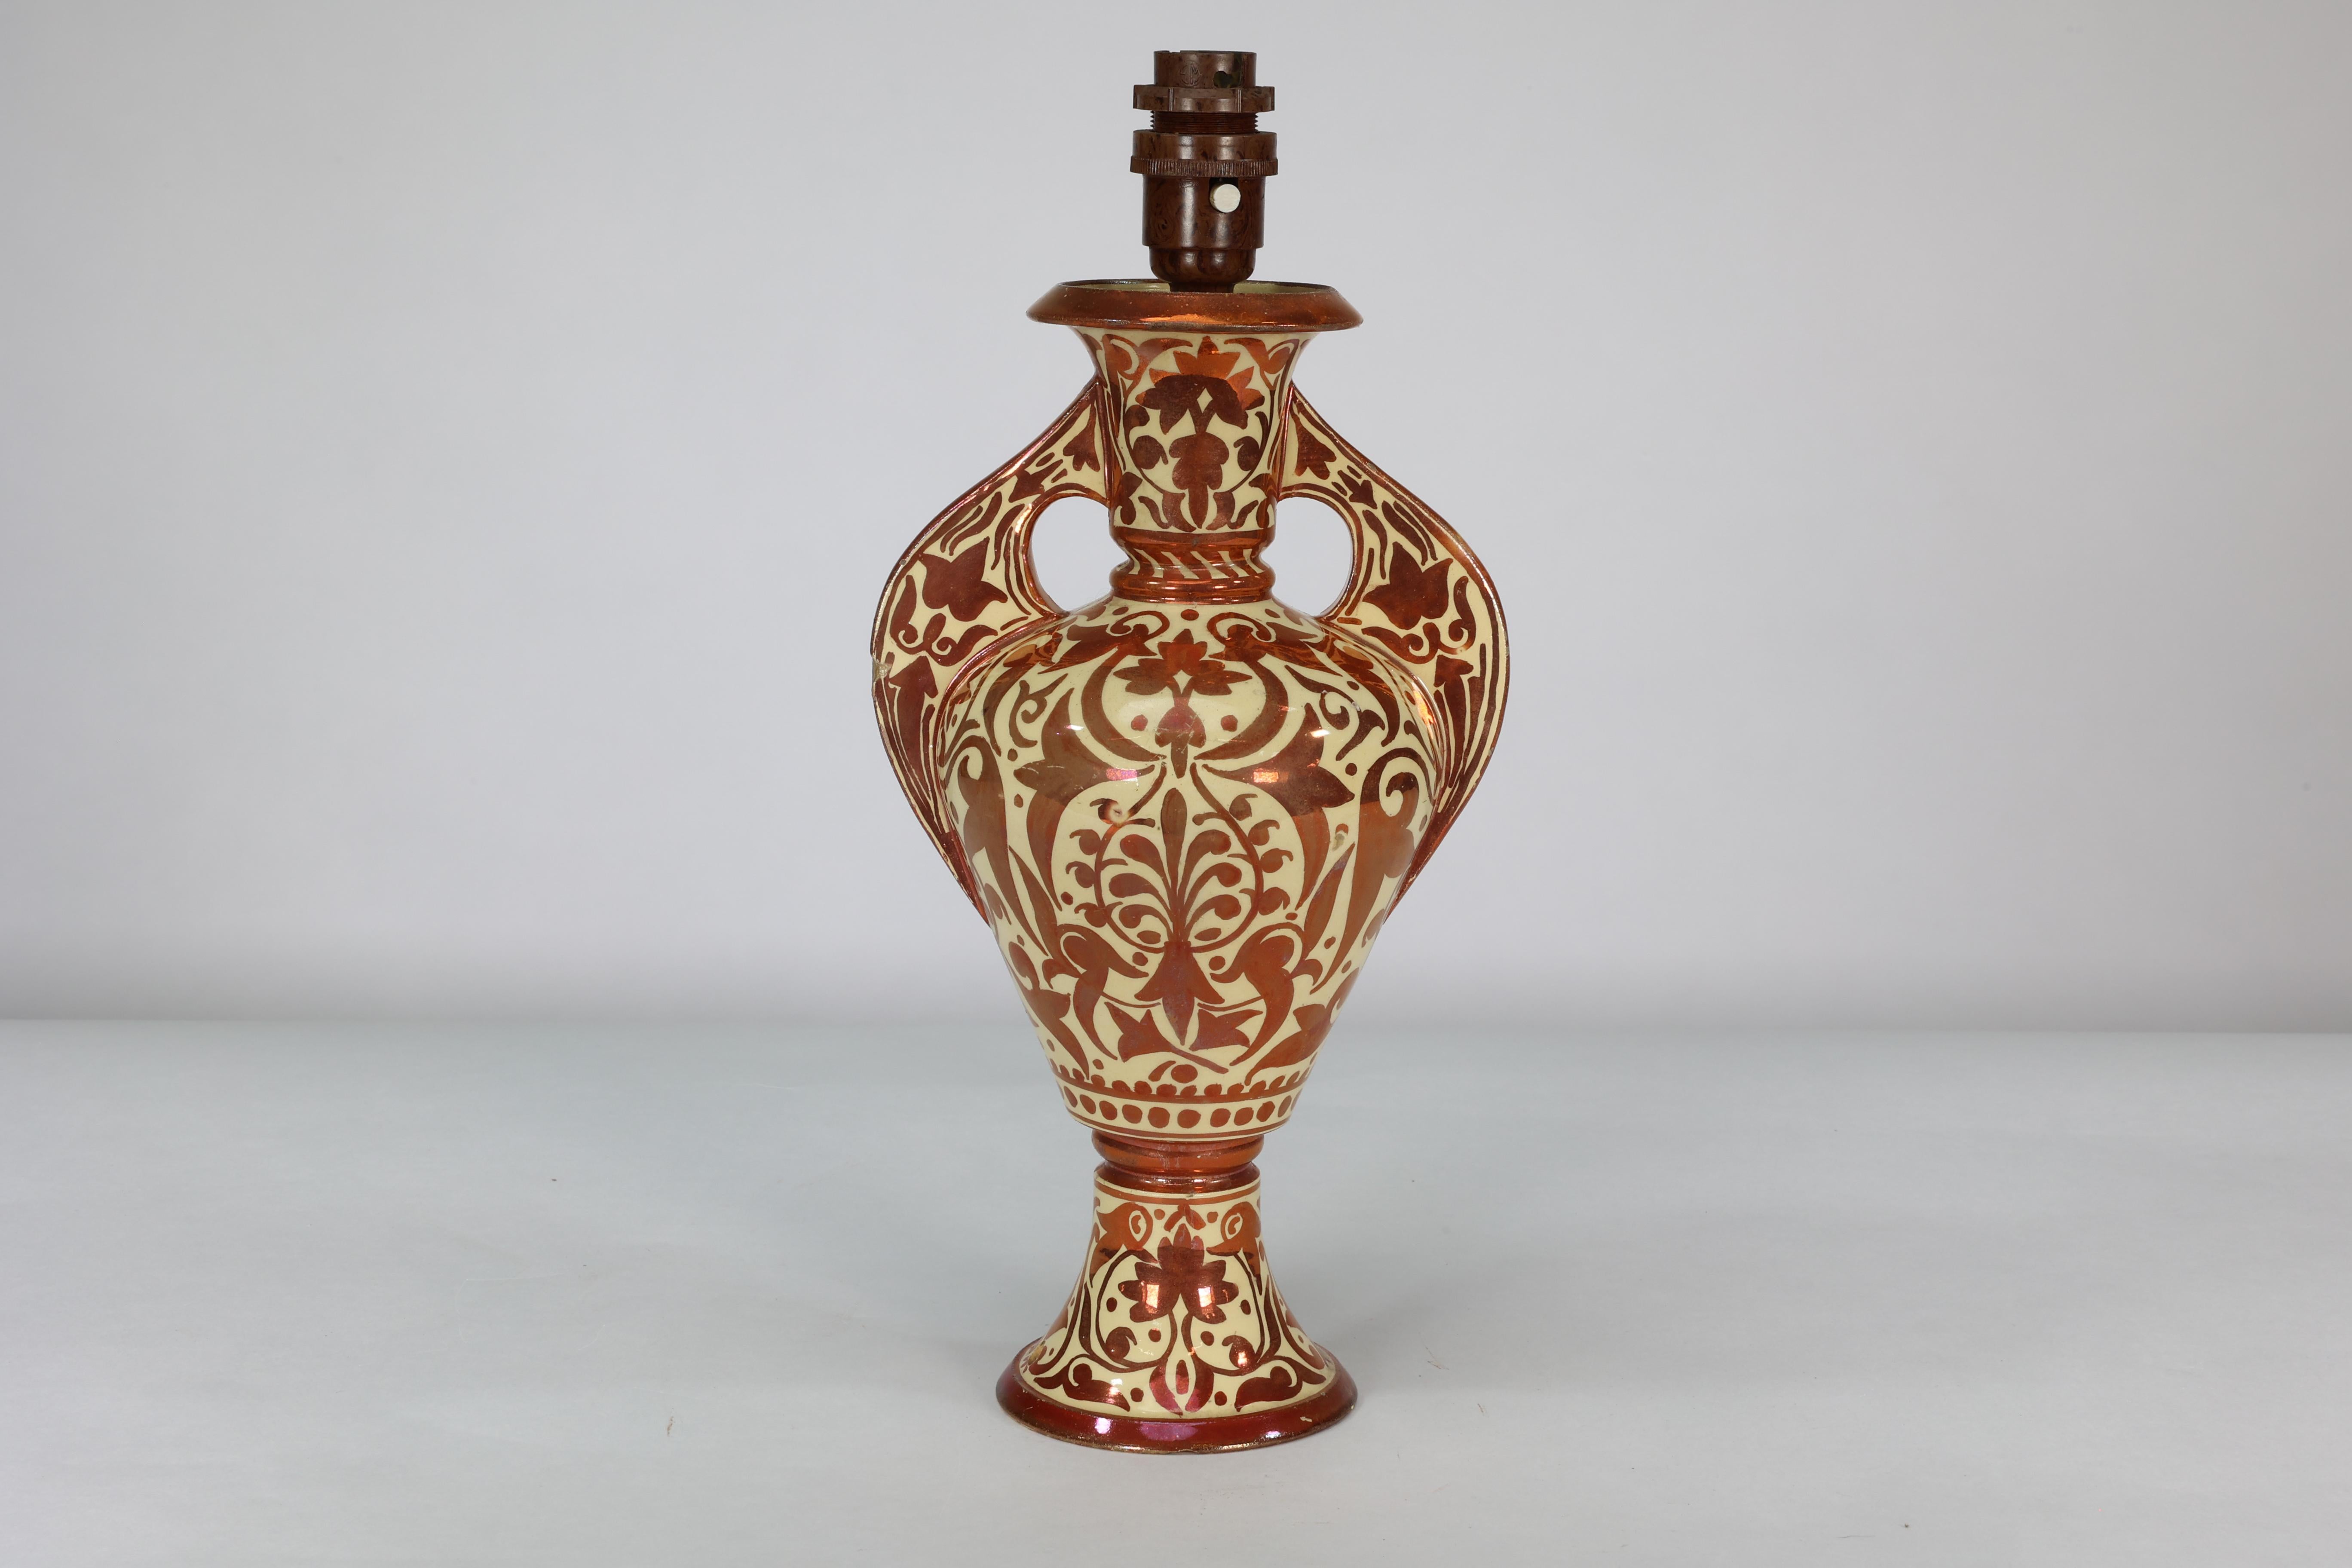 Copper Cantagalli Italian porcelain copper lustre vase converted into a table lamp. For Sale